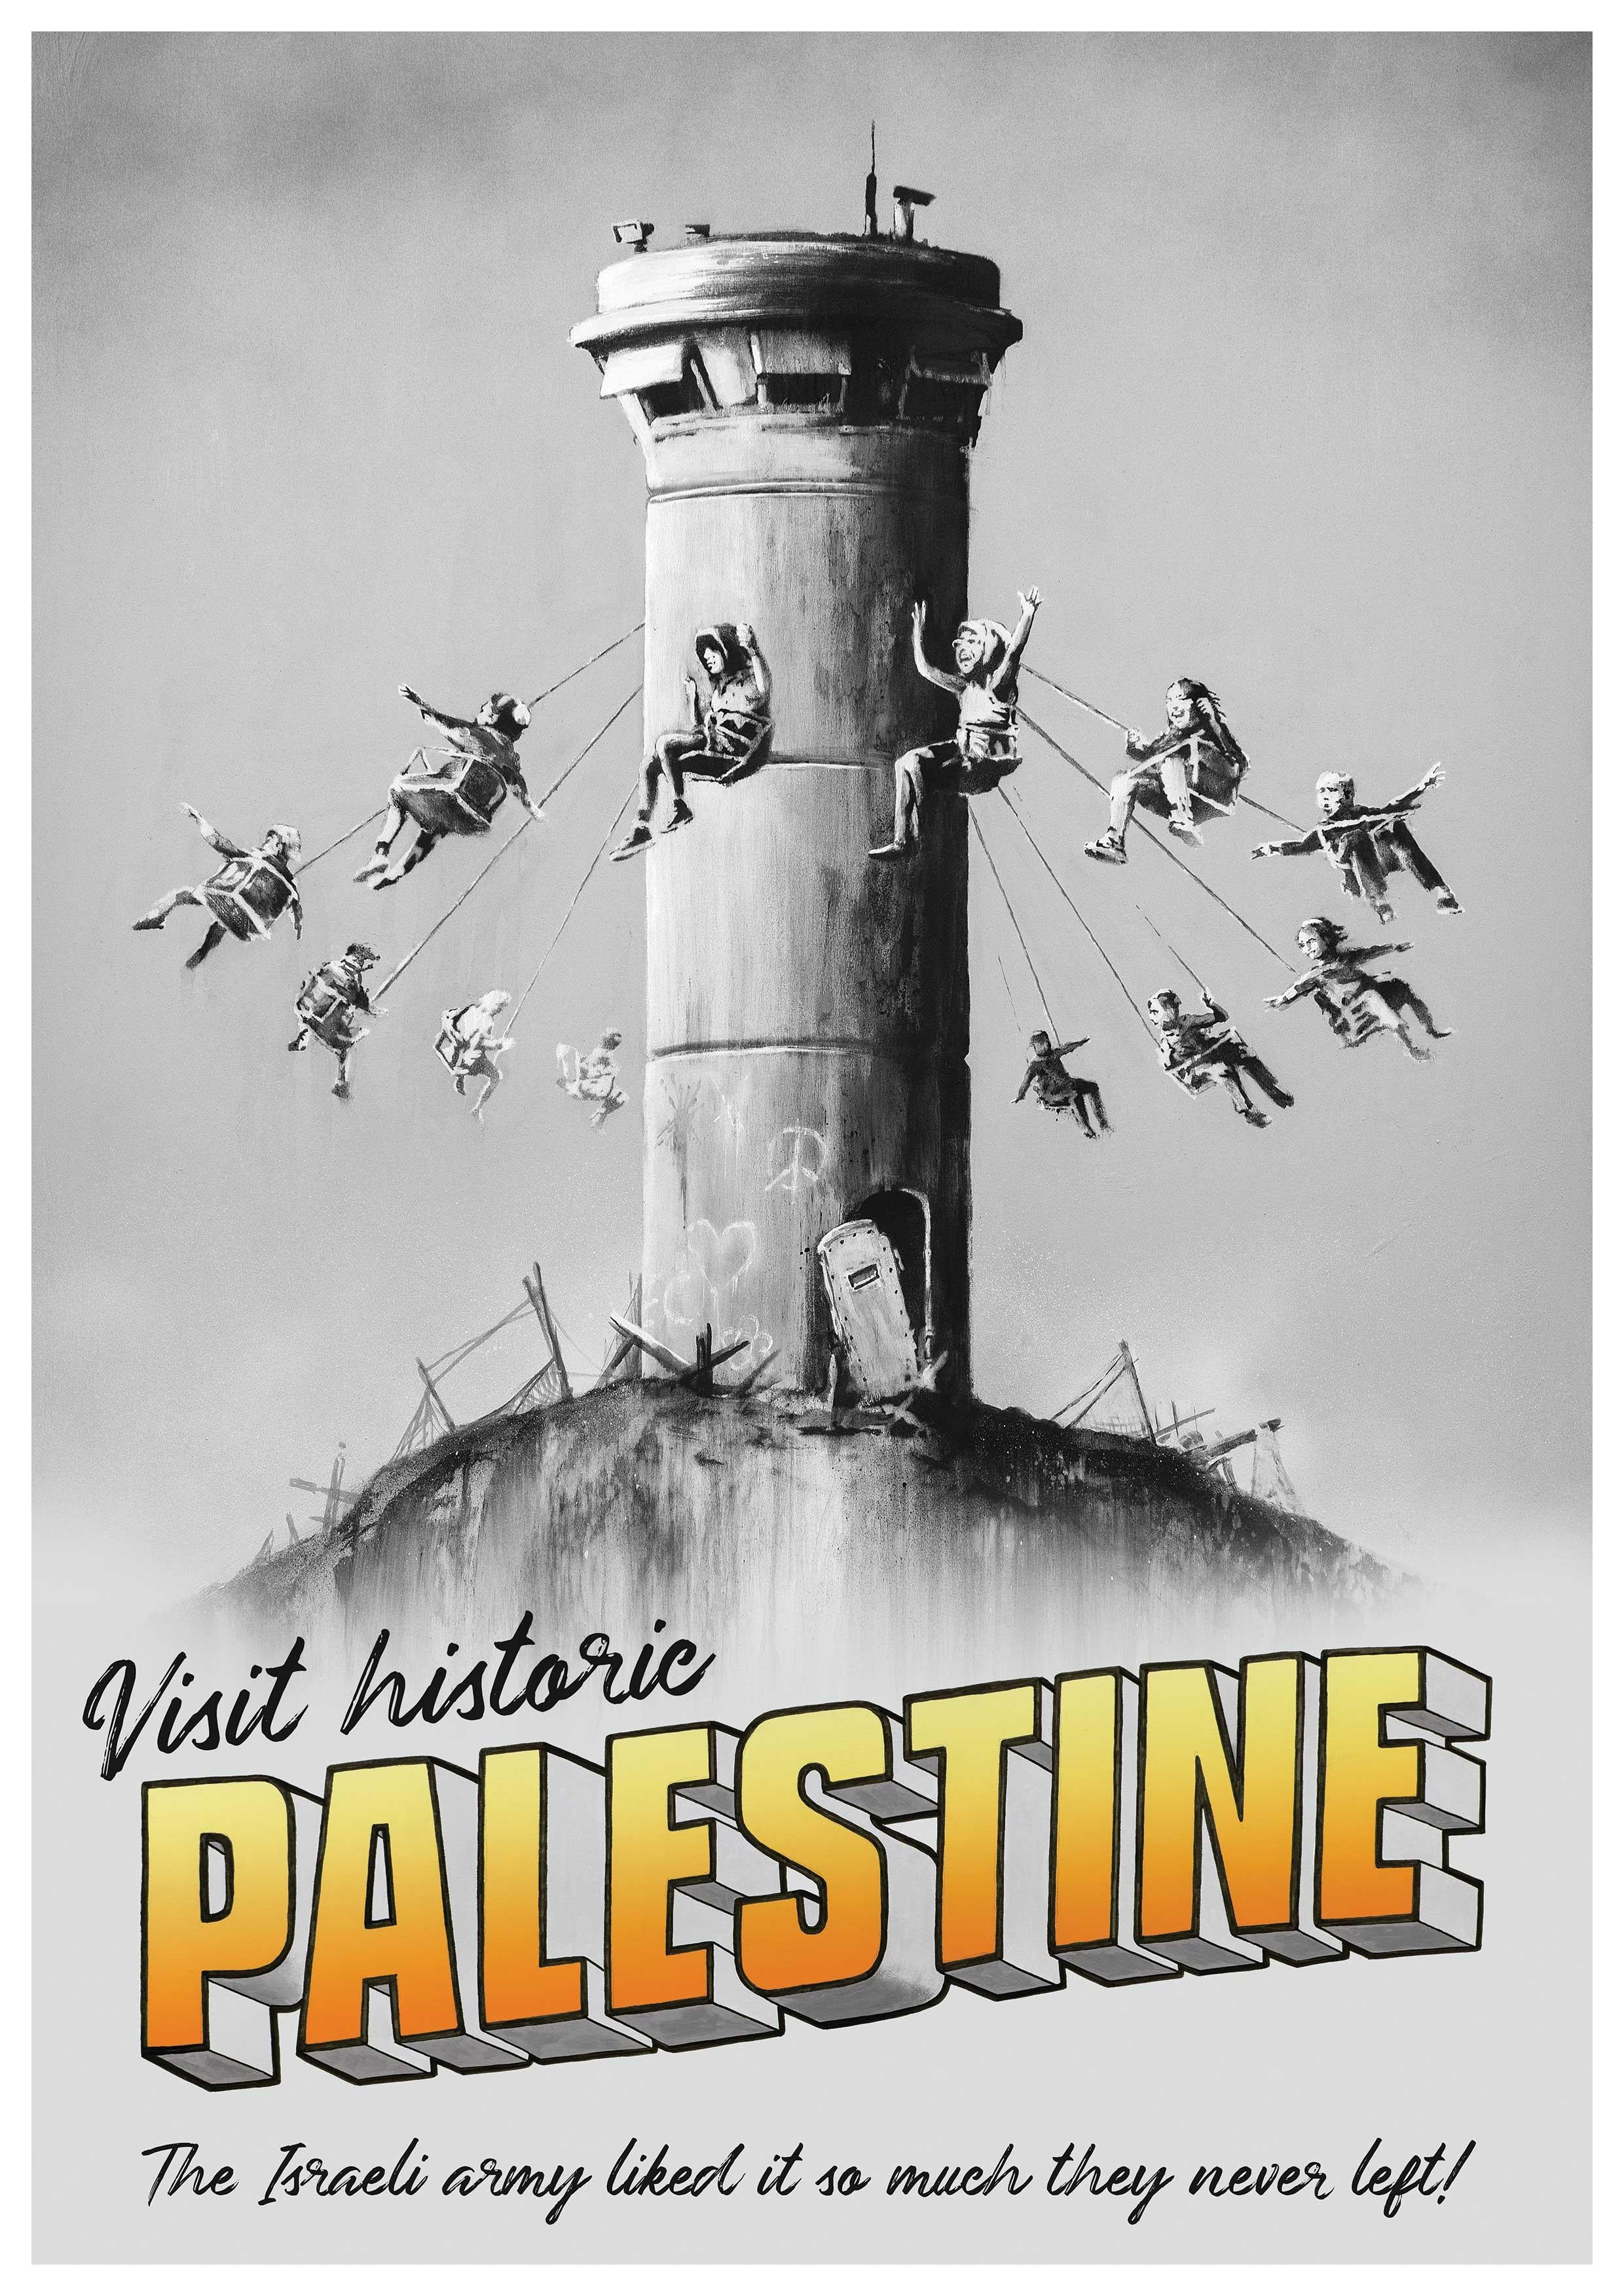 Banksy Interior Print - Visit Historic Palestine - Bansky from Walled Off Hotel